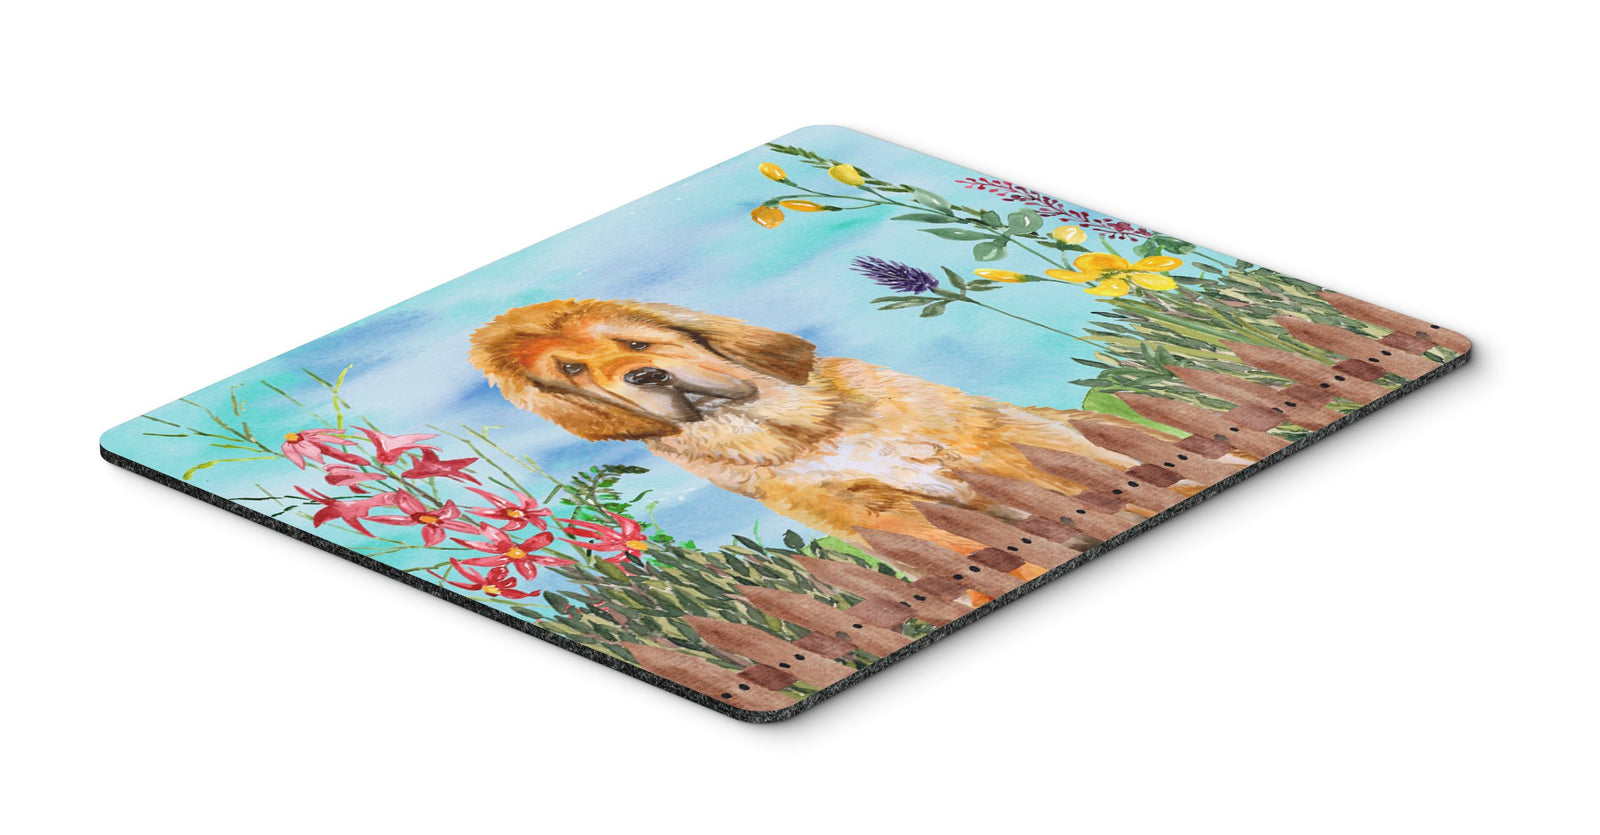 Tibetan Mastiff Spring Mouse Pad, Hot Pad or Trivet CK1283MP by Caroline's Treasures